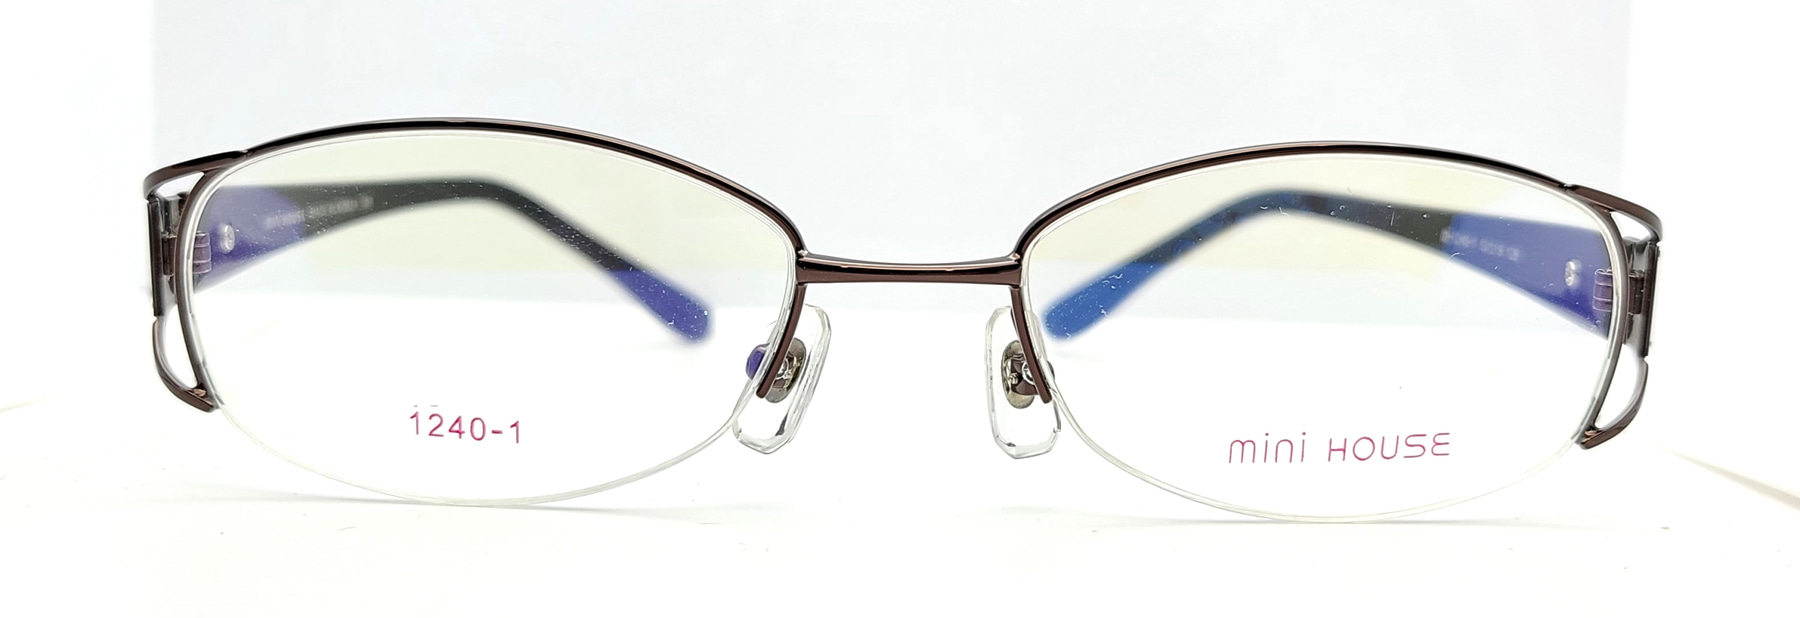 MINIHOUSE M-1240-1, Korean glasses, sunglasses, eyeglasses, glasses